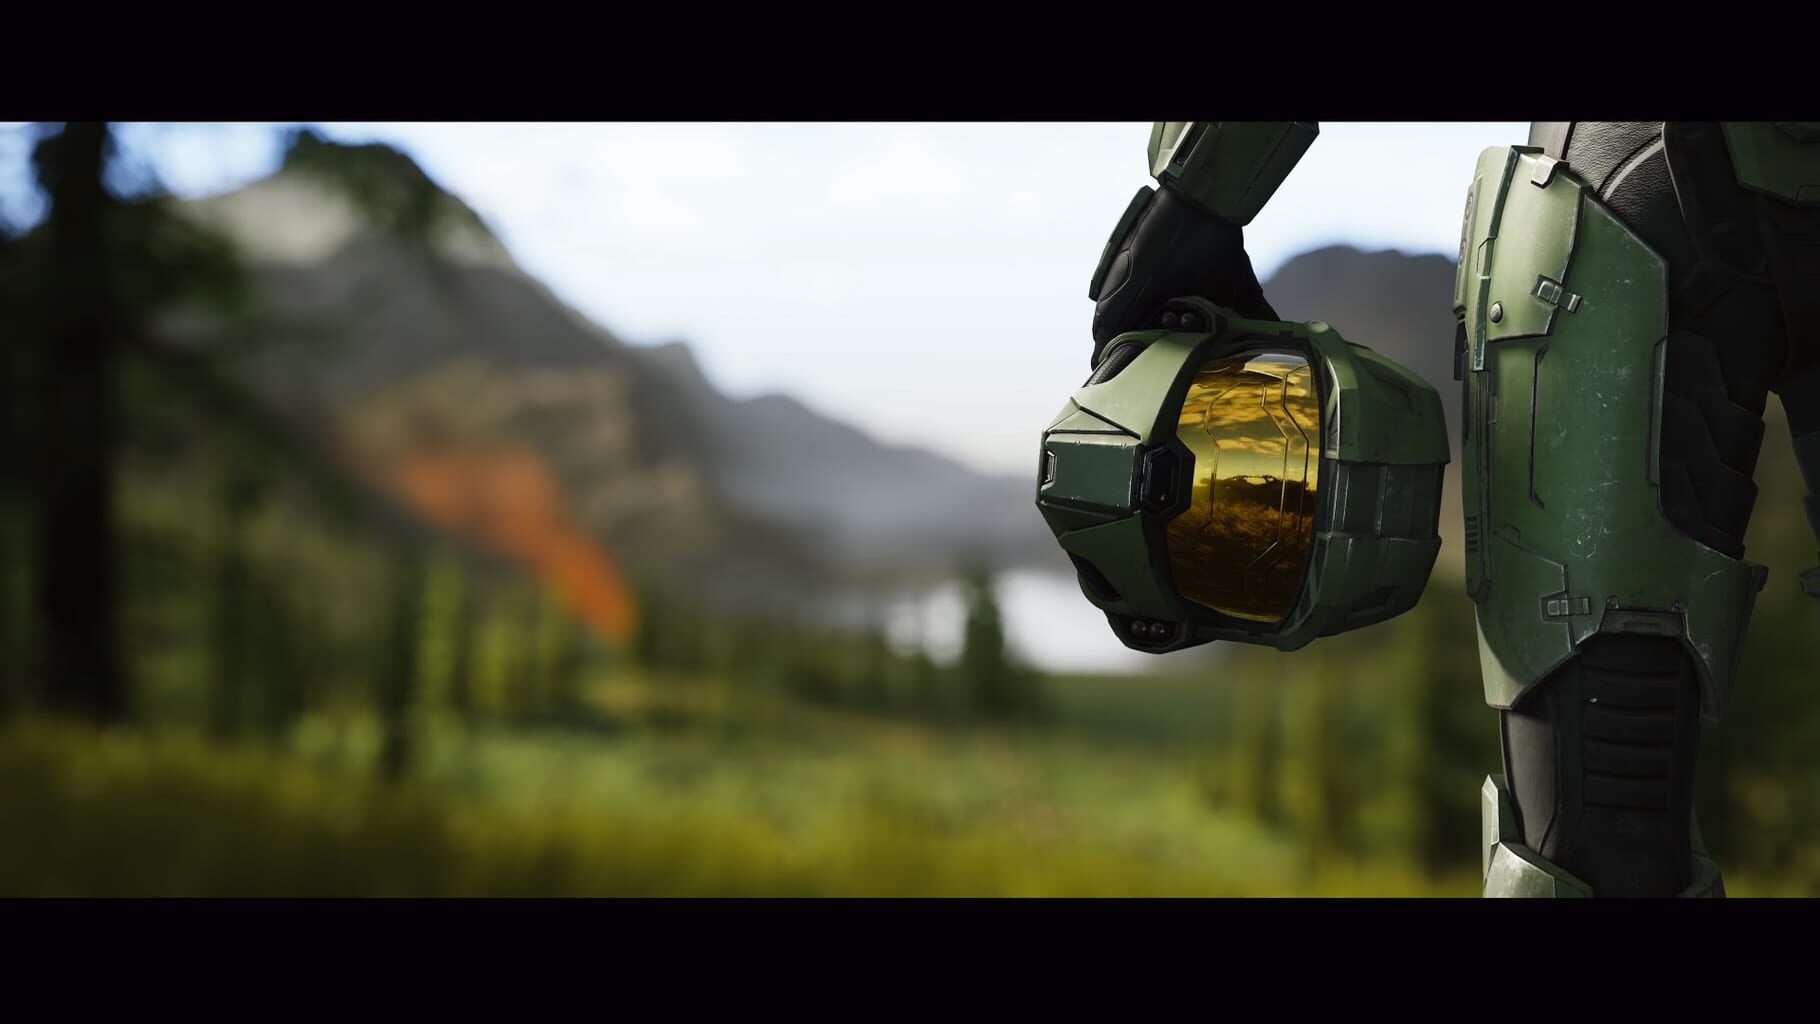 Halo Infinite screenshots